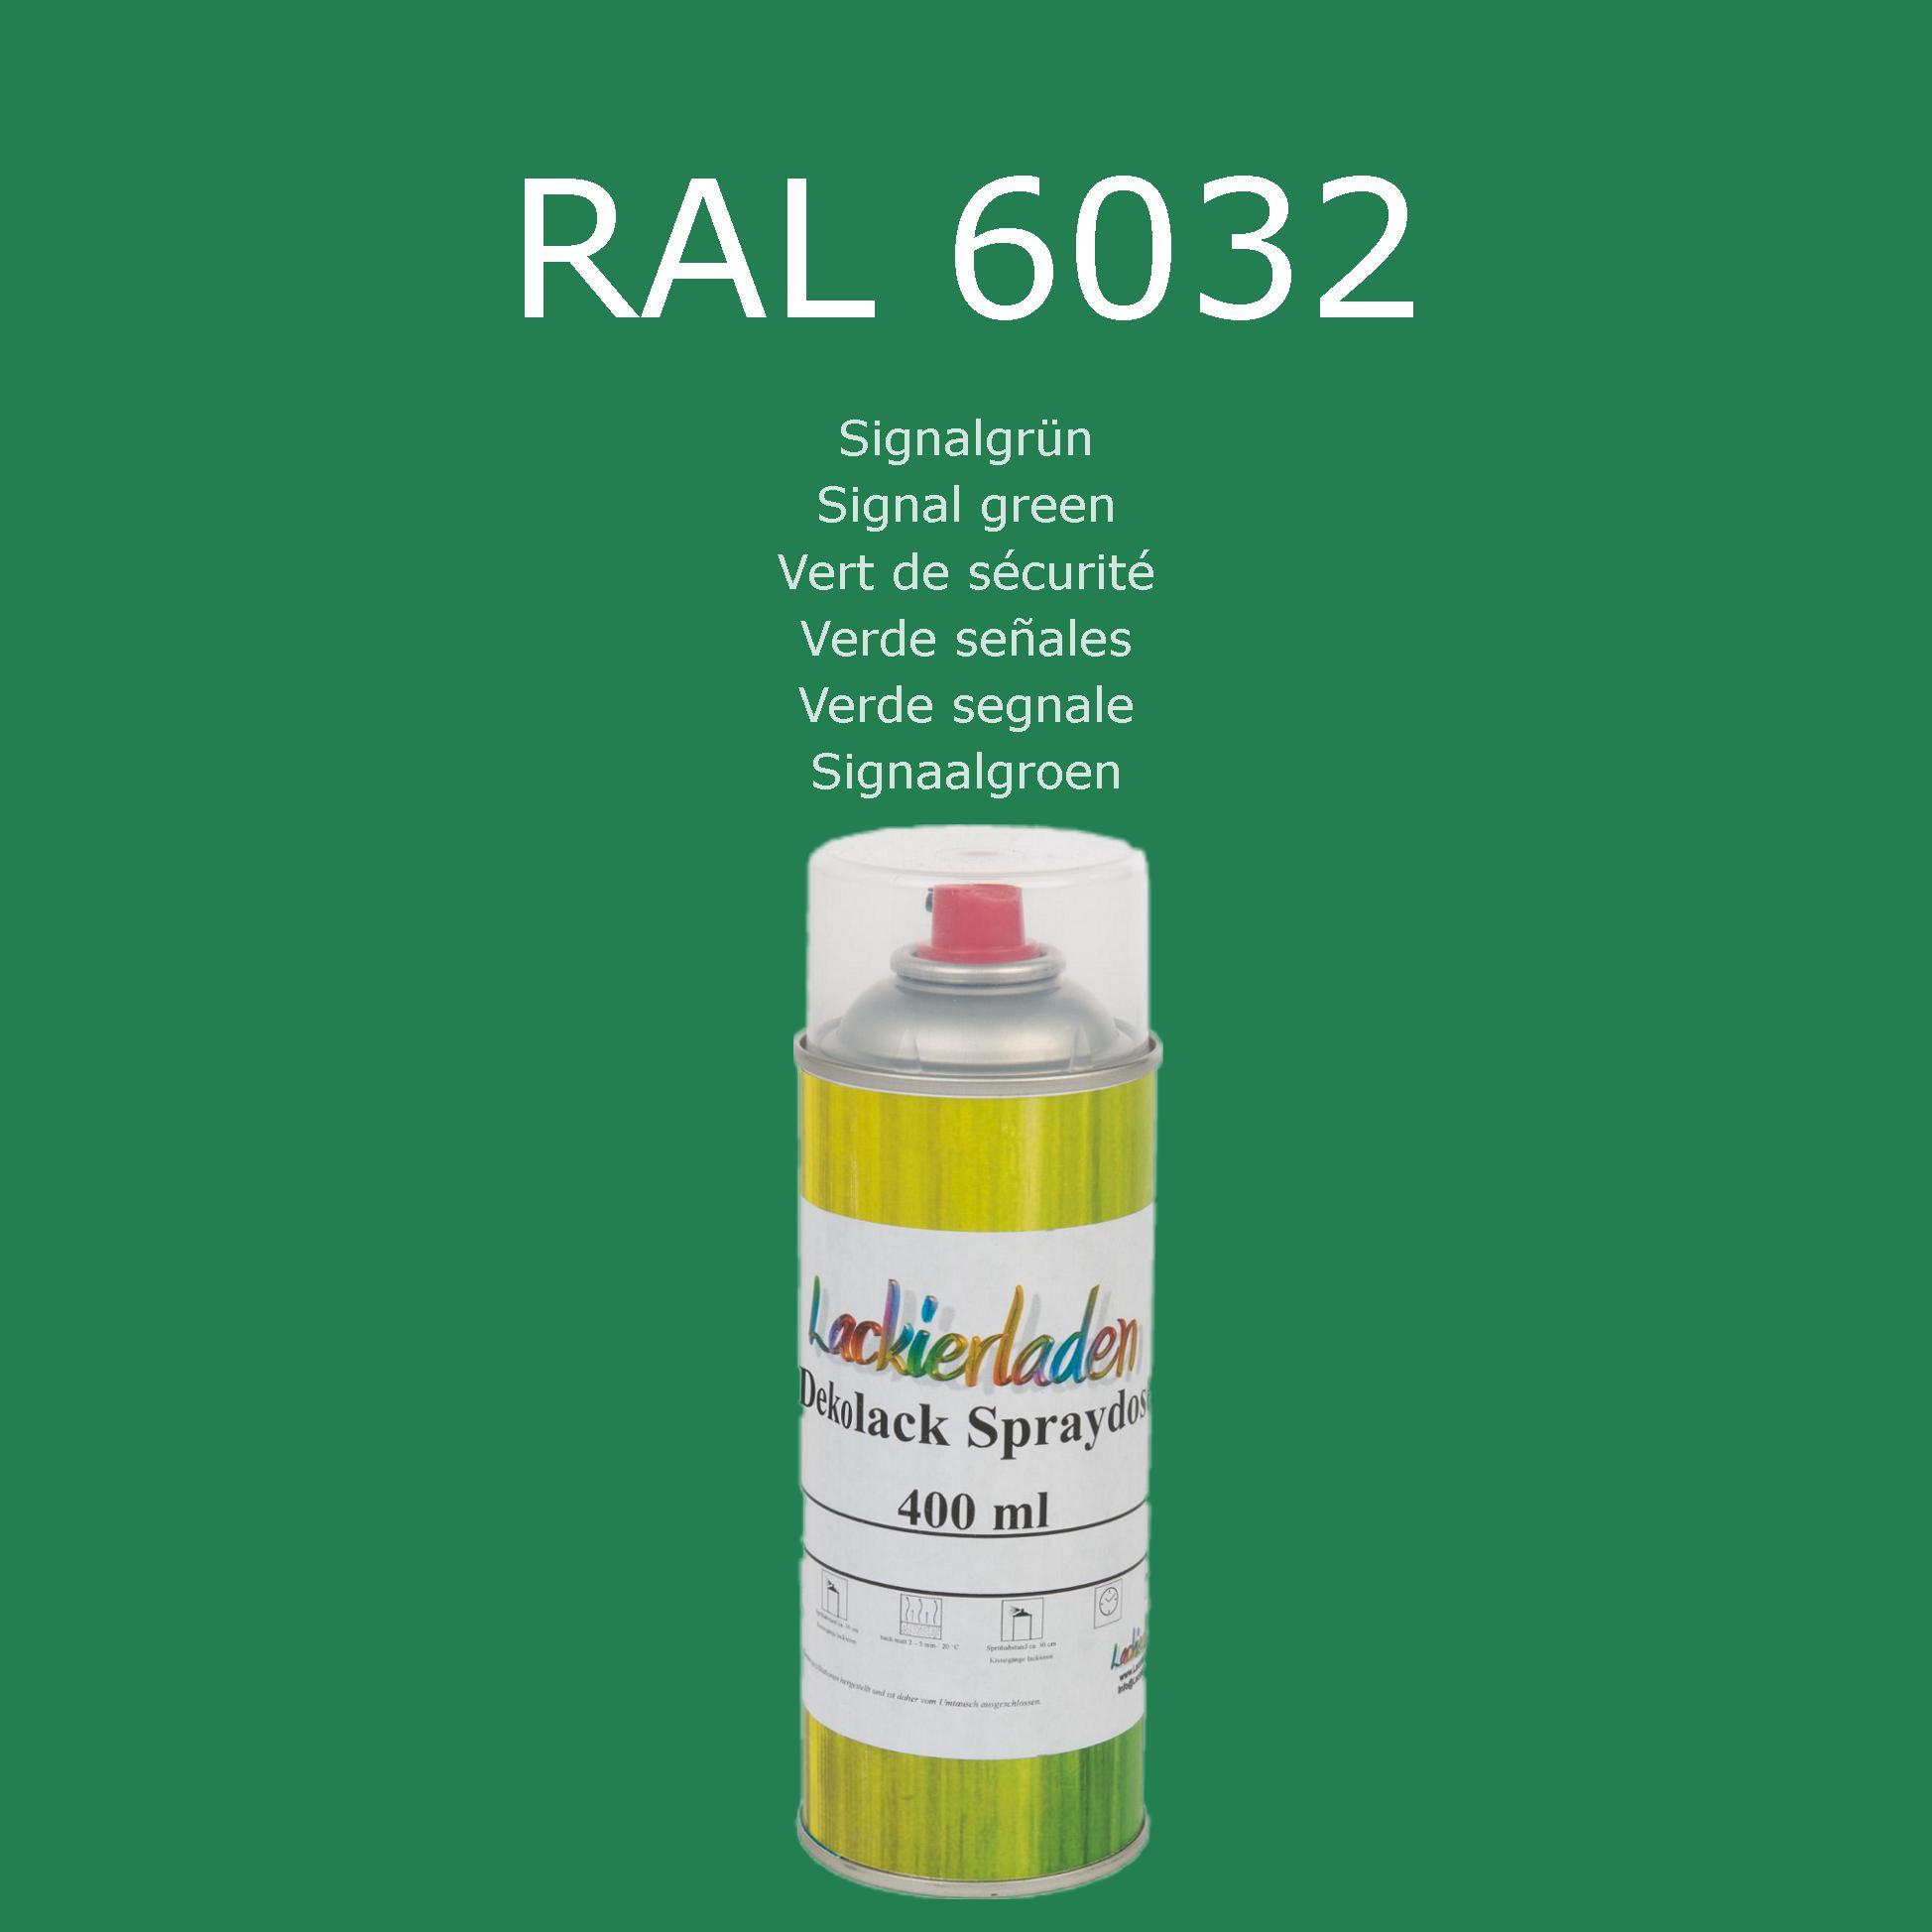 Dekolack Spraydose 400 ml RAL 6032 Signalgrün Signal green Vert de sécurité Verde señales Verde segnale Signaalgroen | Decolack Lackspray Sprüh Dose